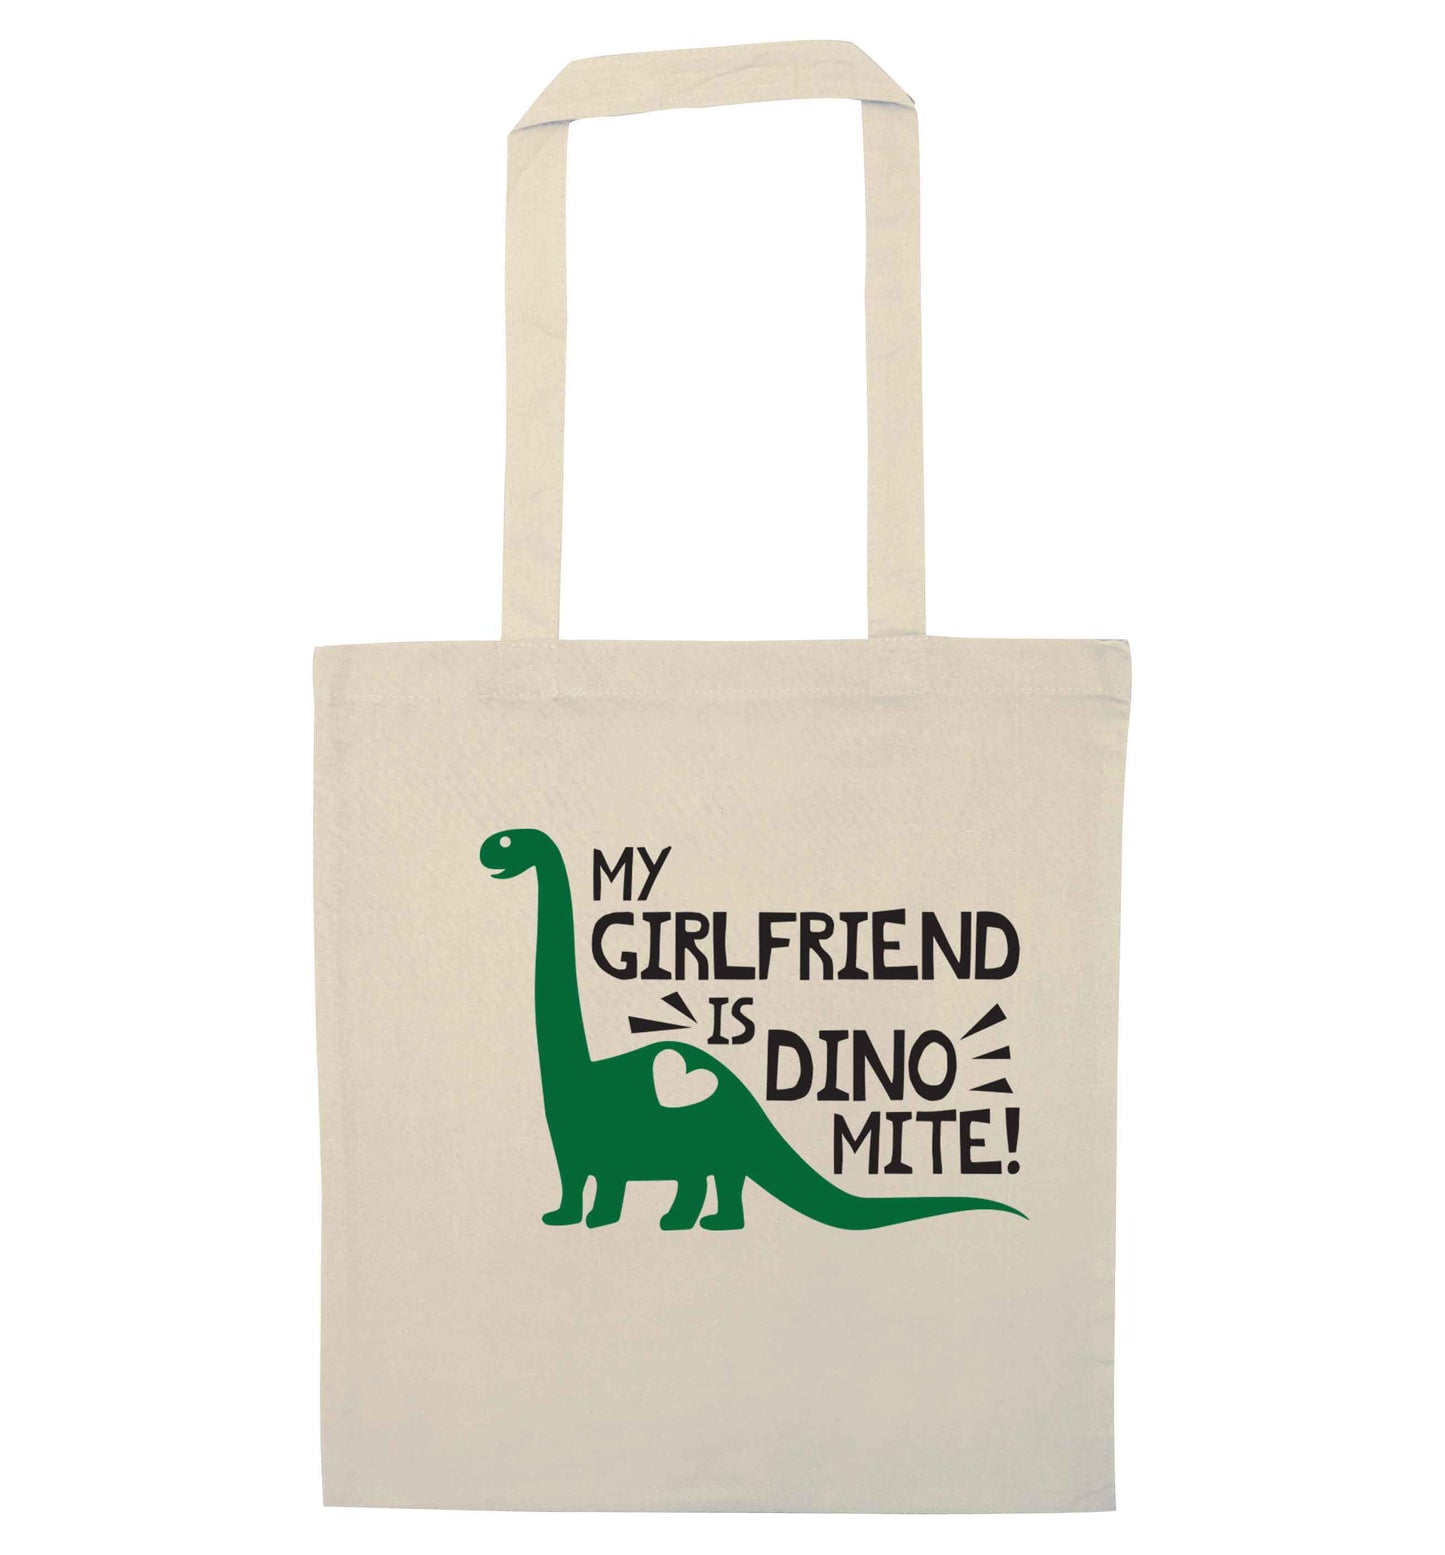 My girlfriend is dinomite! natural tote bag